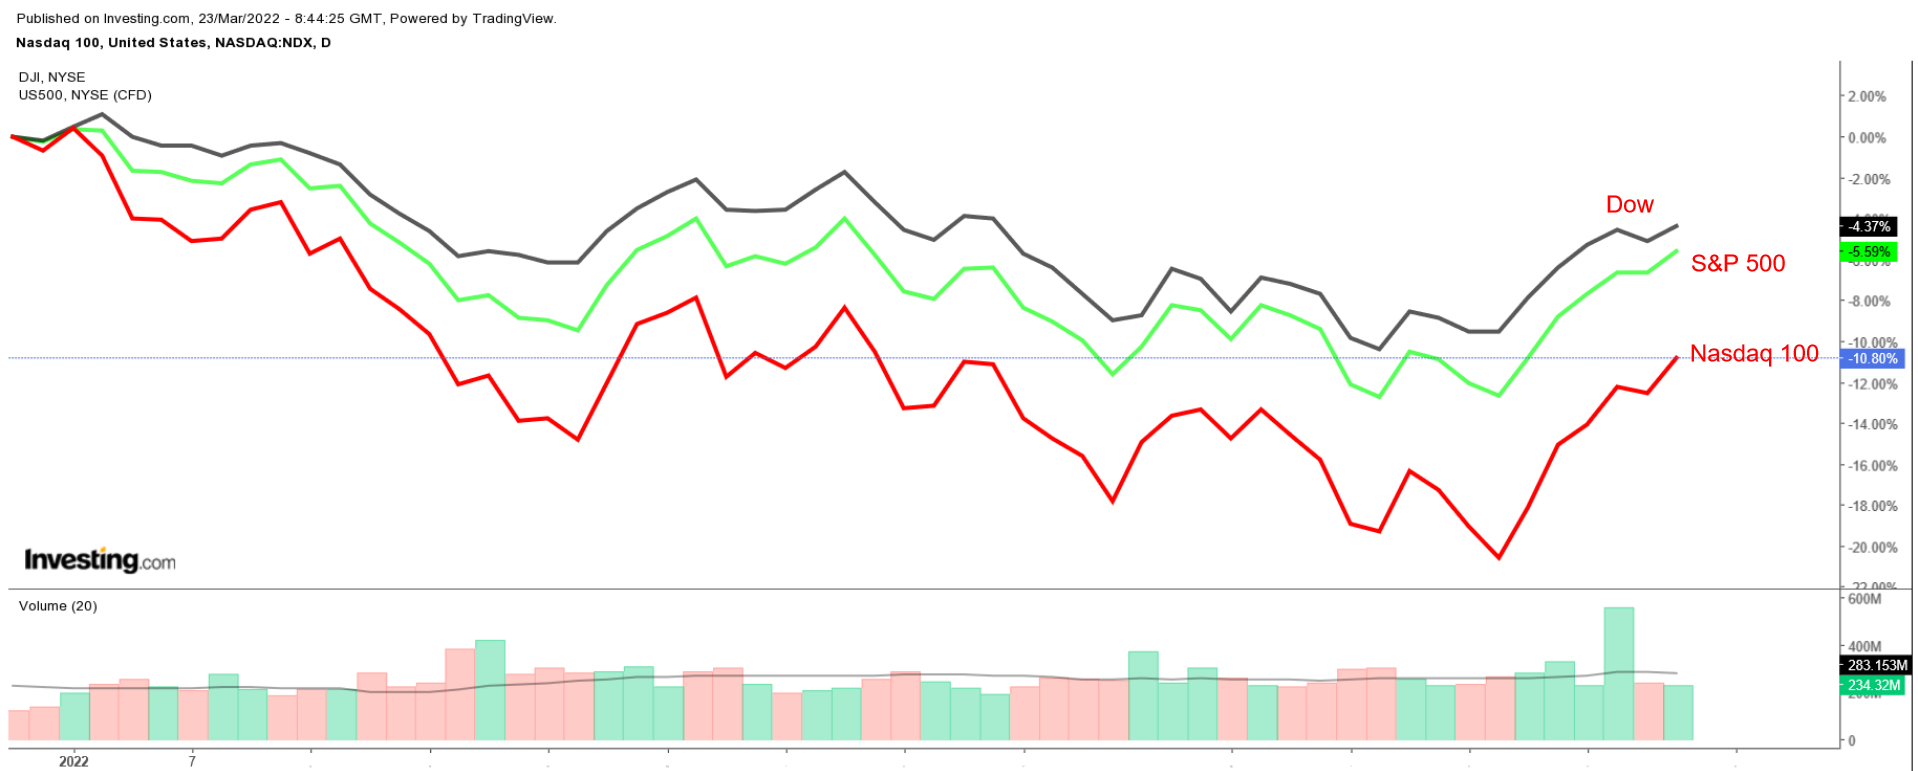 NASDAQ, DOW and S&P 500 Daily Charts